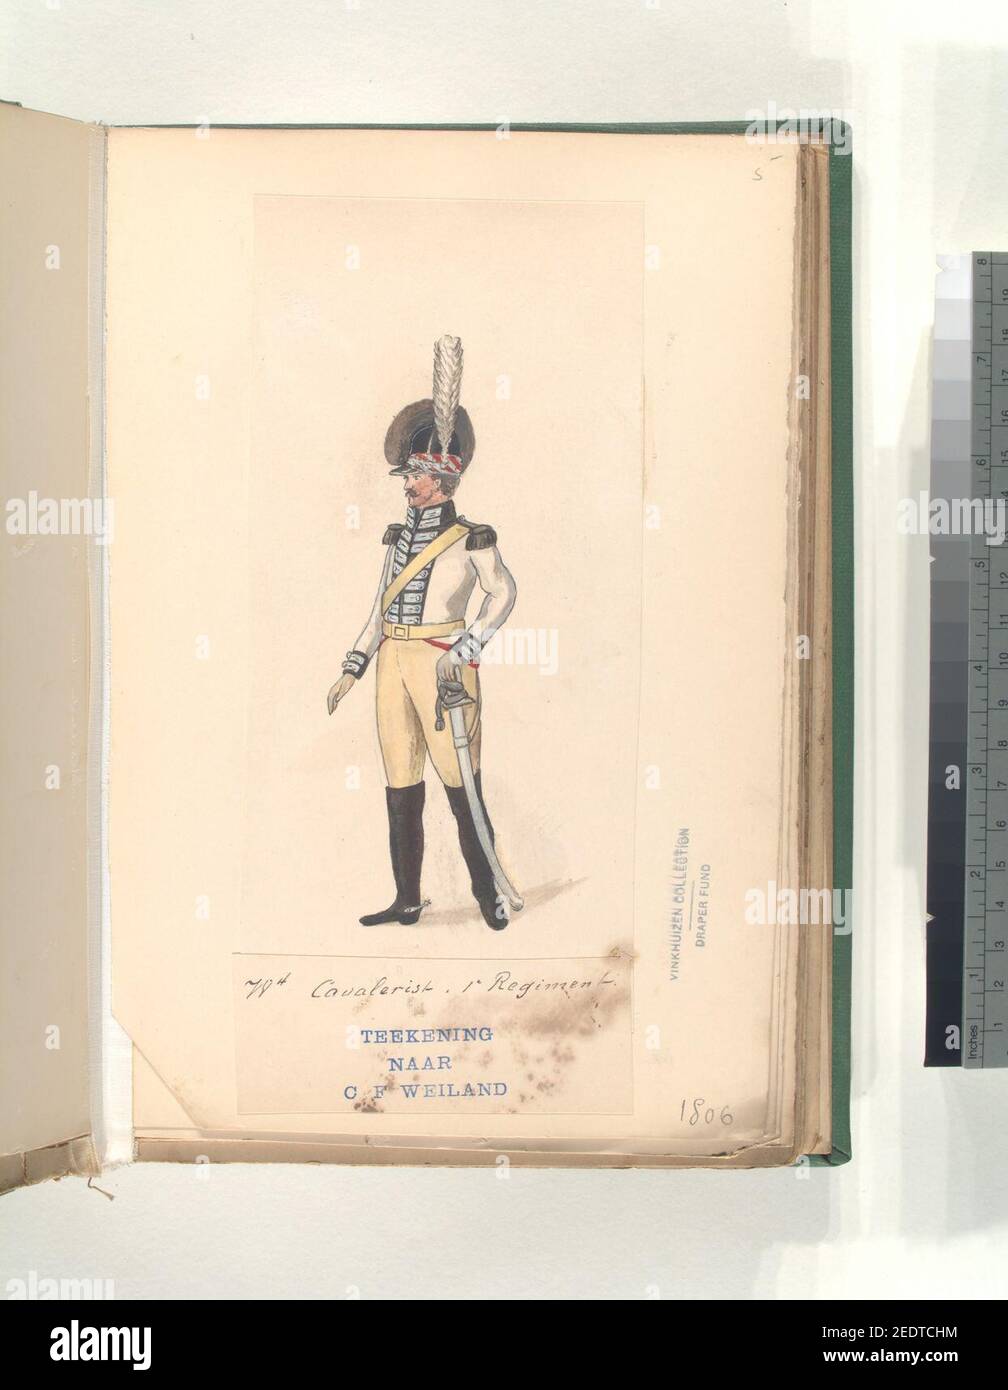 W4 Kavalerist, 1 Regiment. Teekening naar C. F. Weiland. 1806 Stockfoto